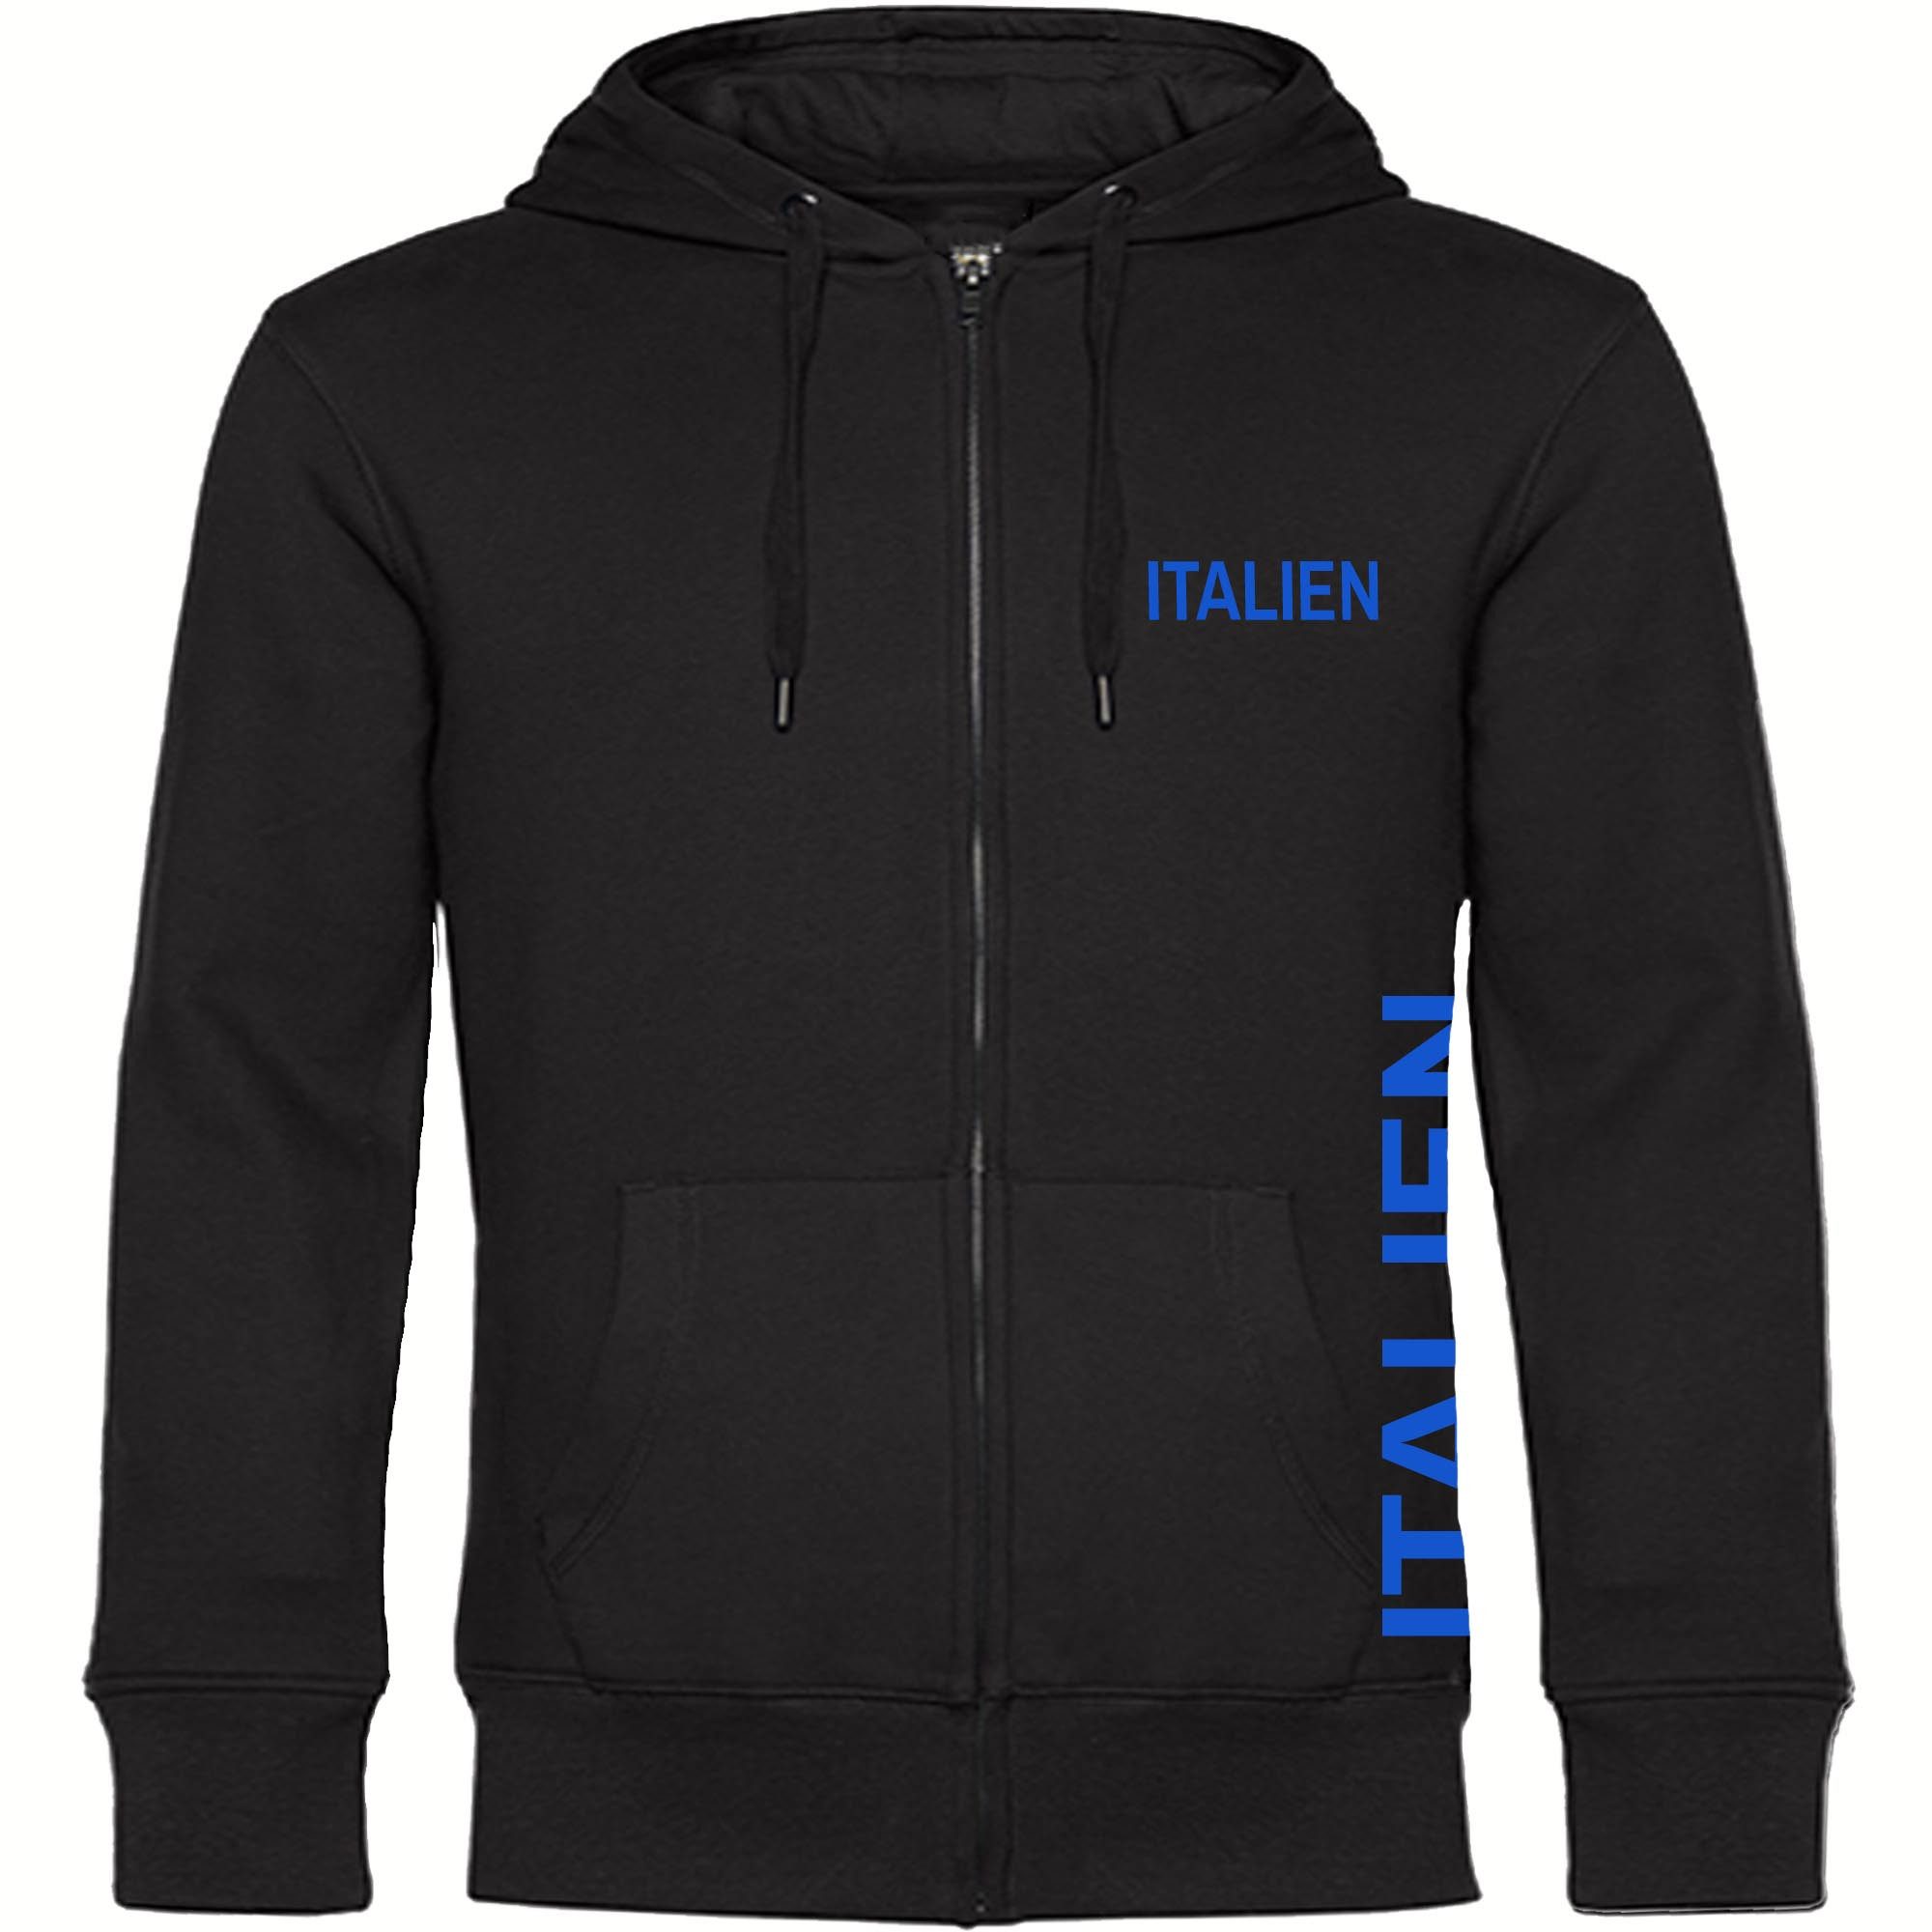 multifanshop Kapuzensweatjacke Italien - Brust & Seite - Pullover